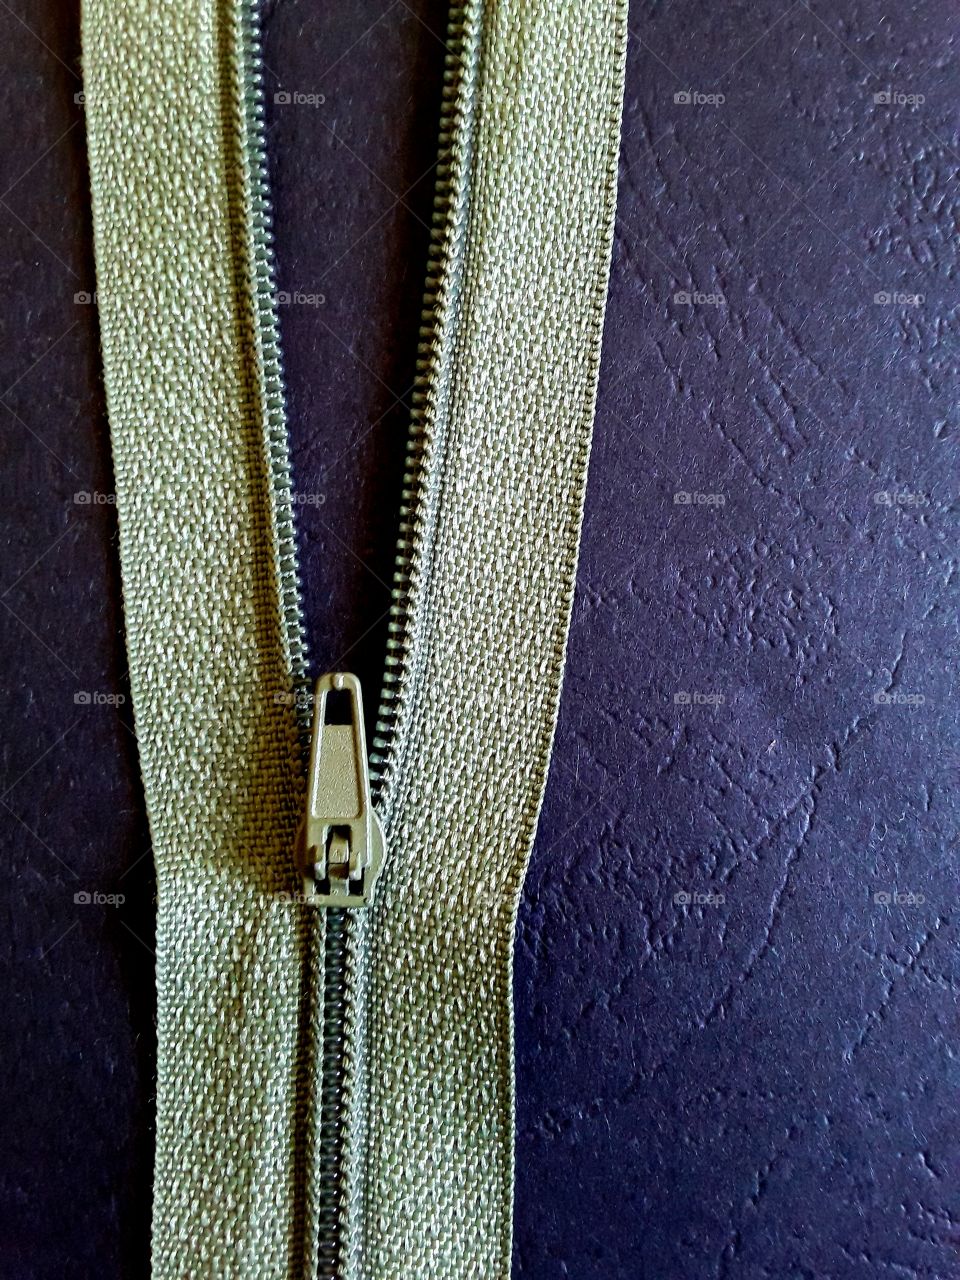 symmetry everywhere:zipper